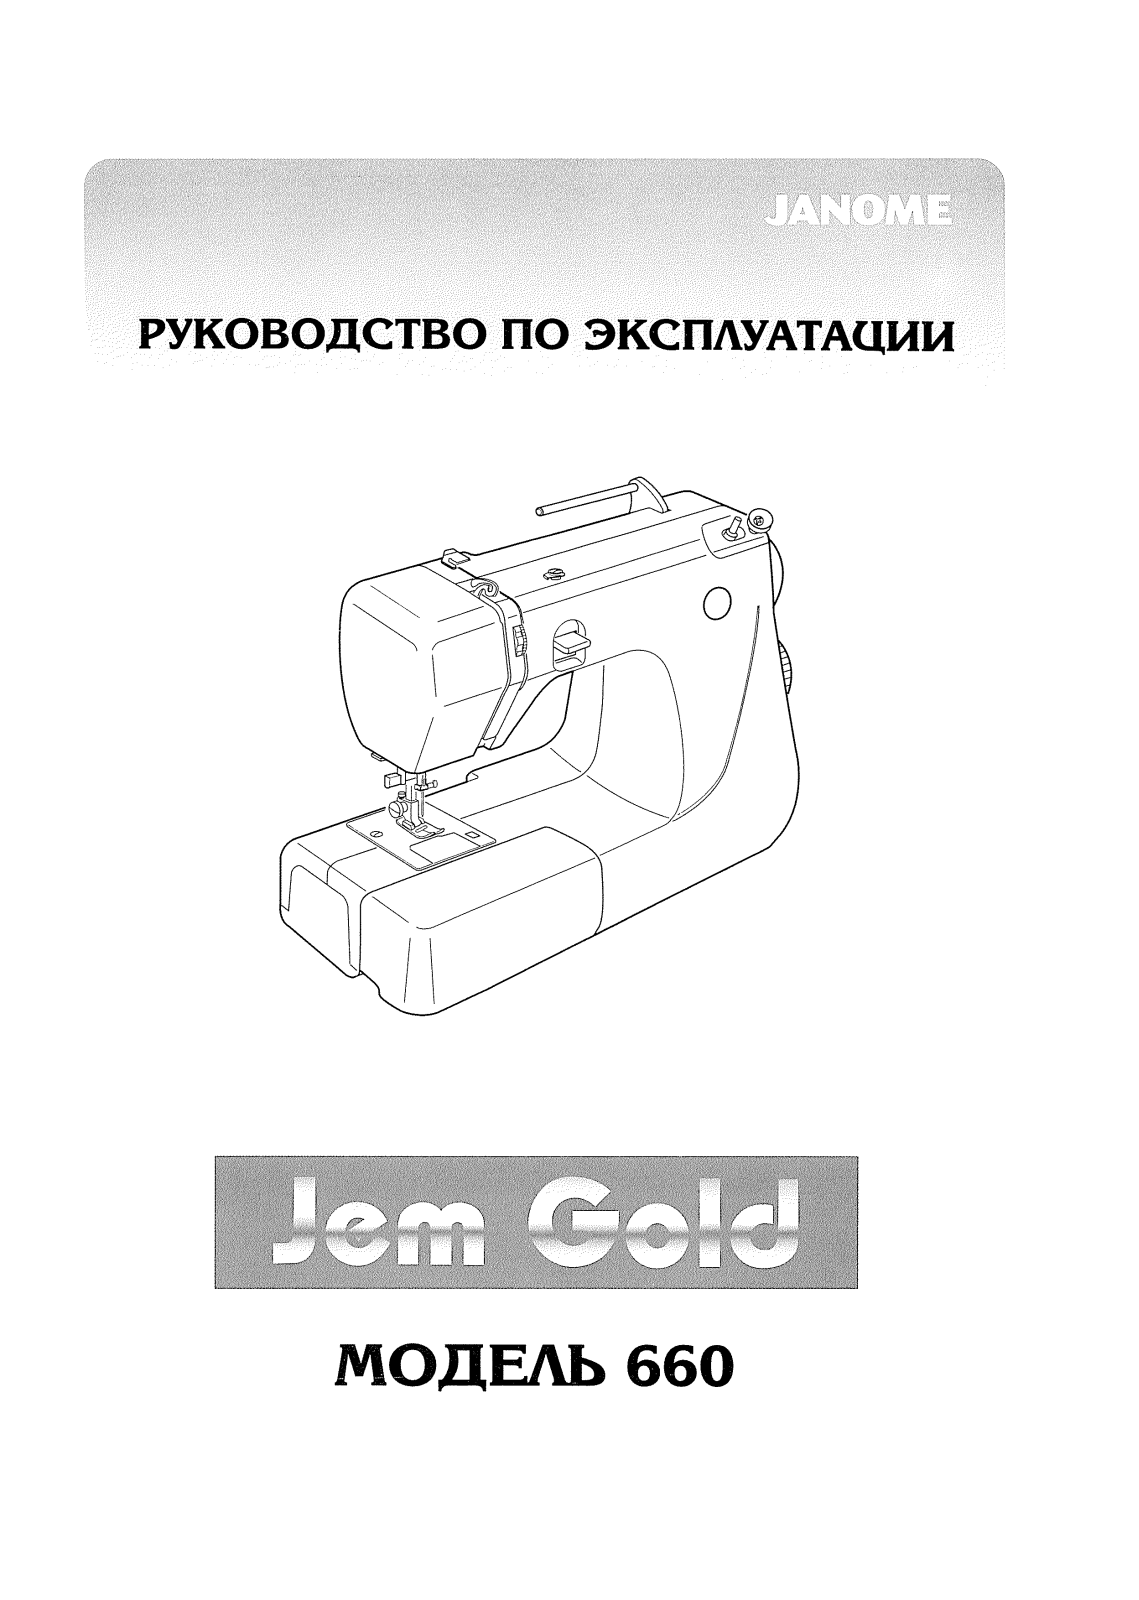 JANOME Jem Gold 660 User Manual